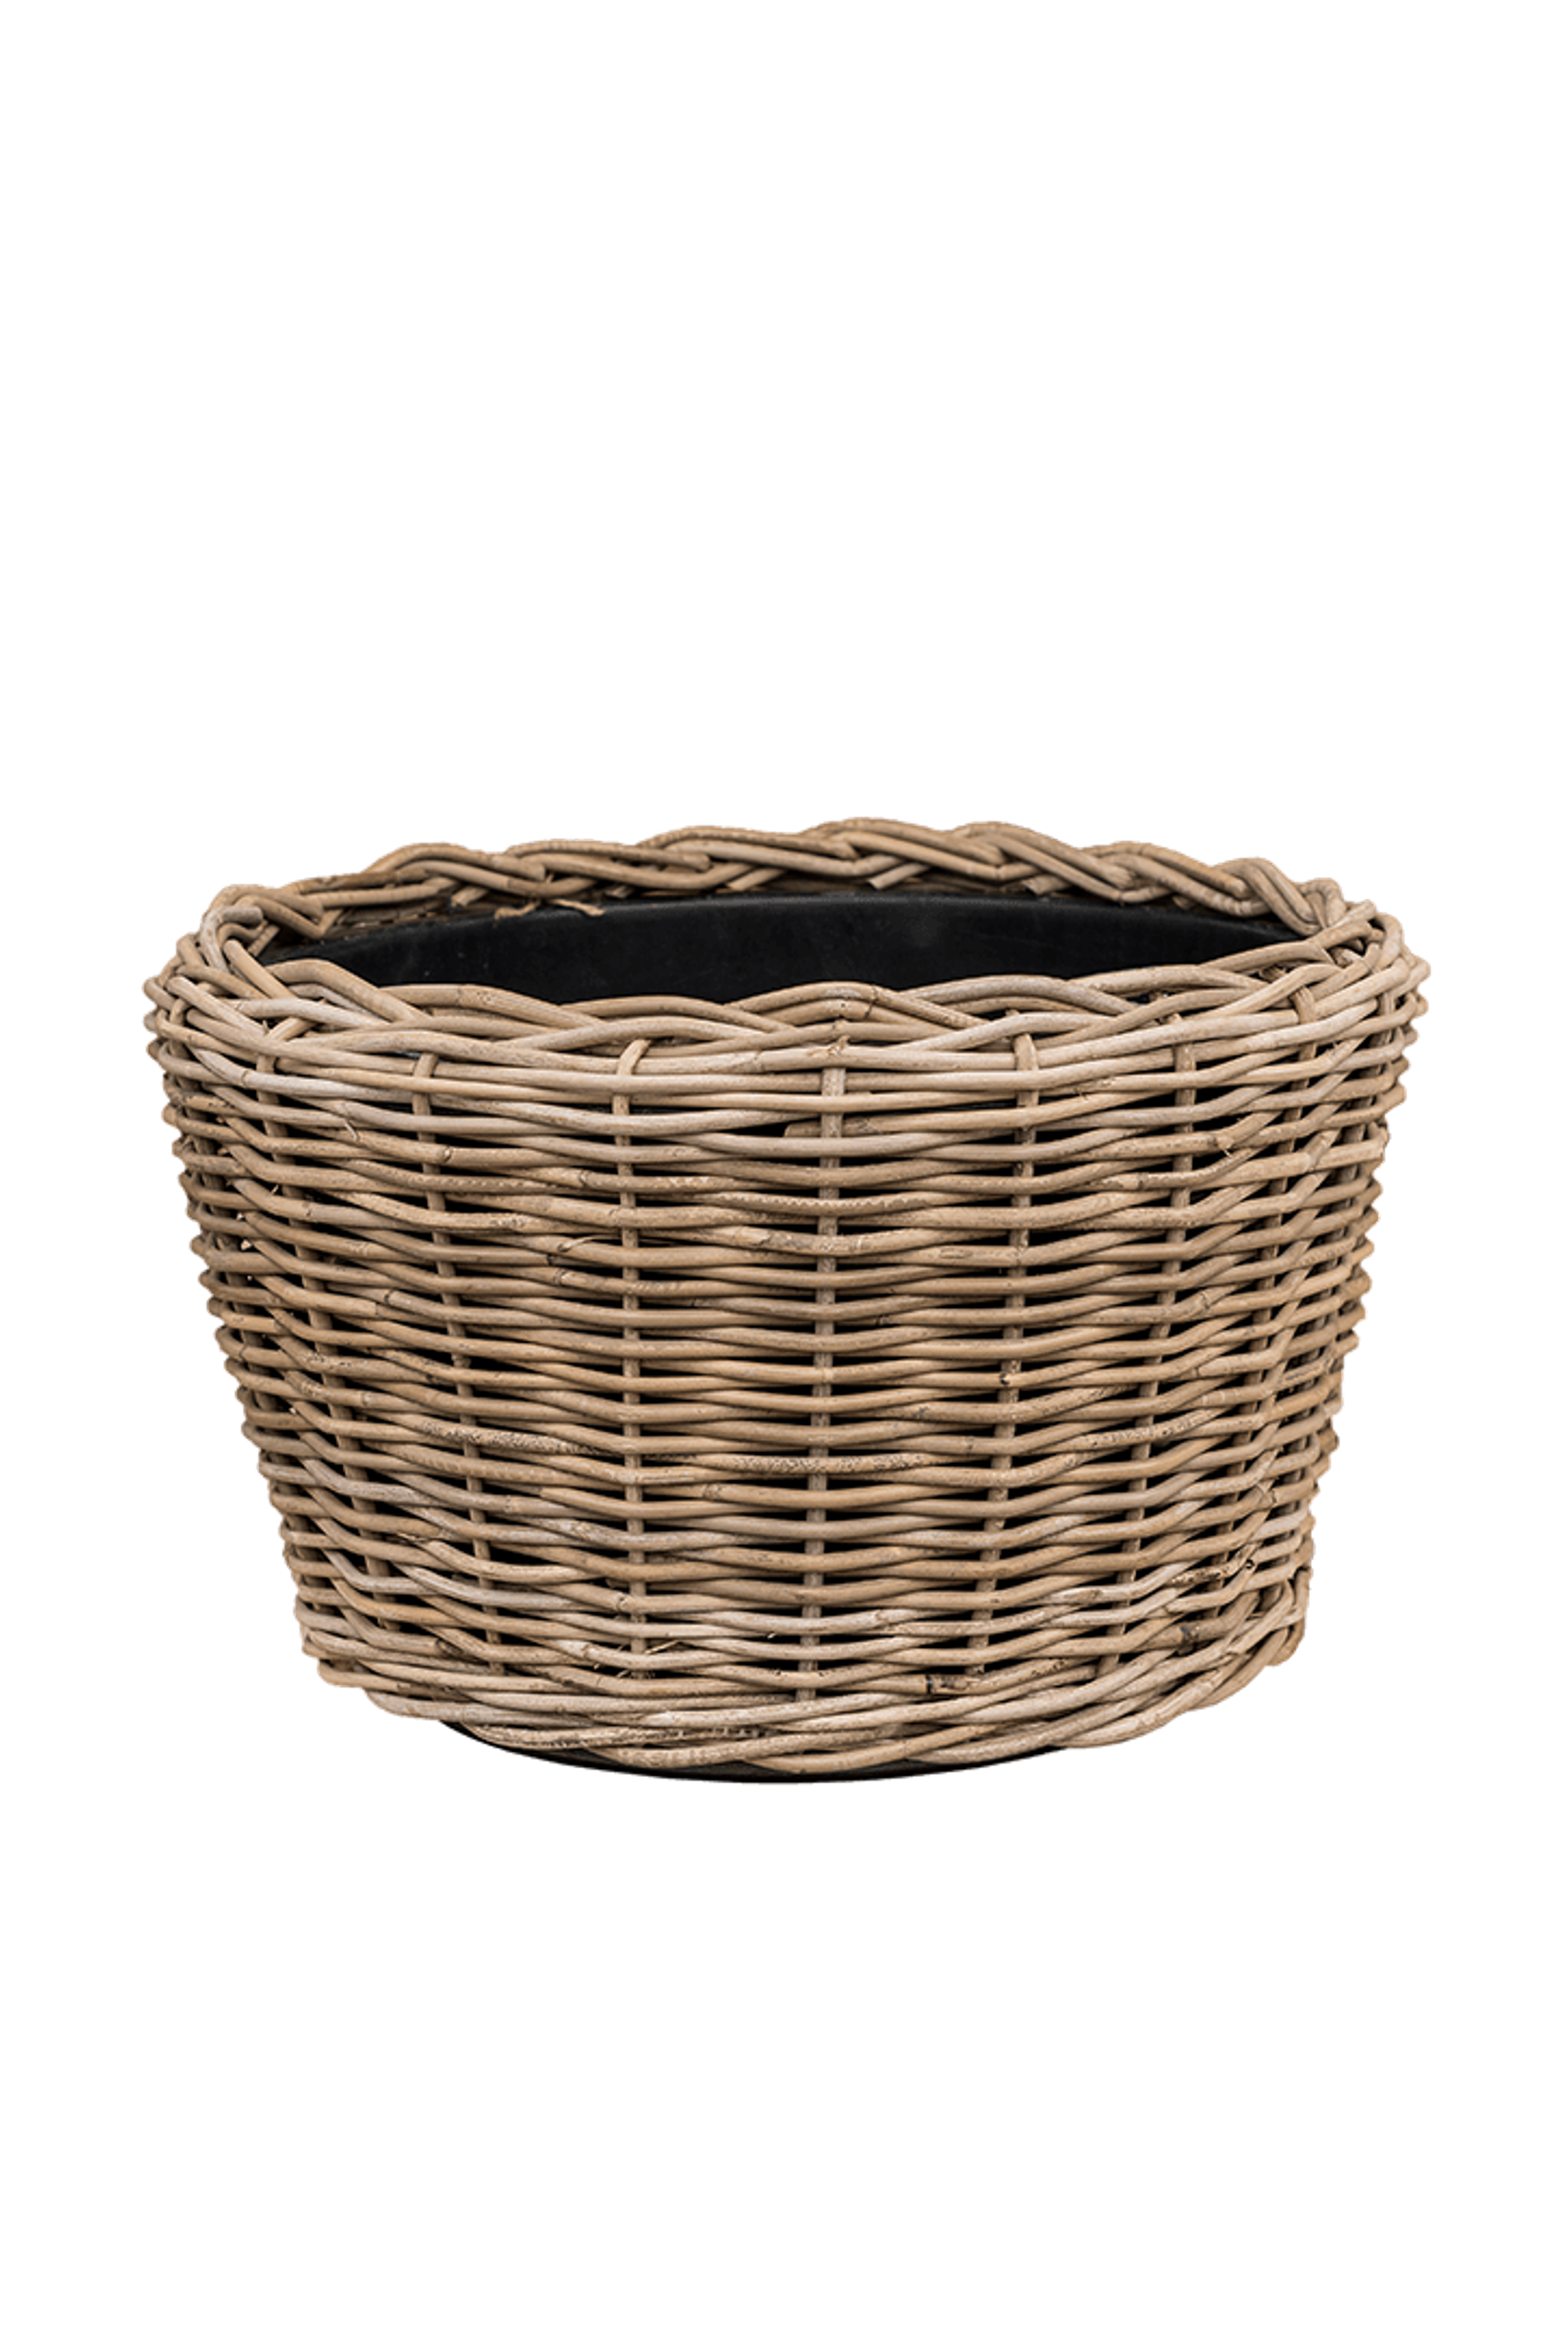 Chunky rattan baskets (drypot)